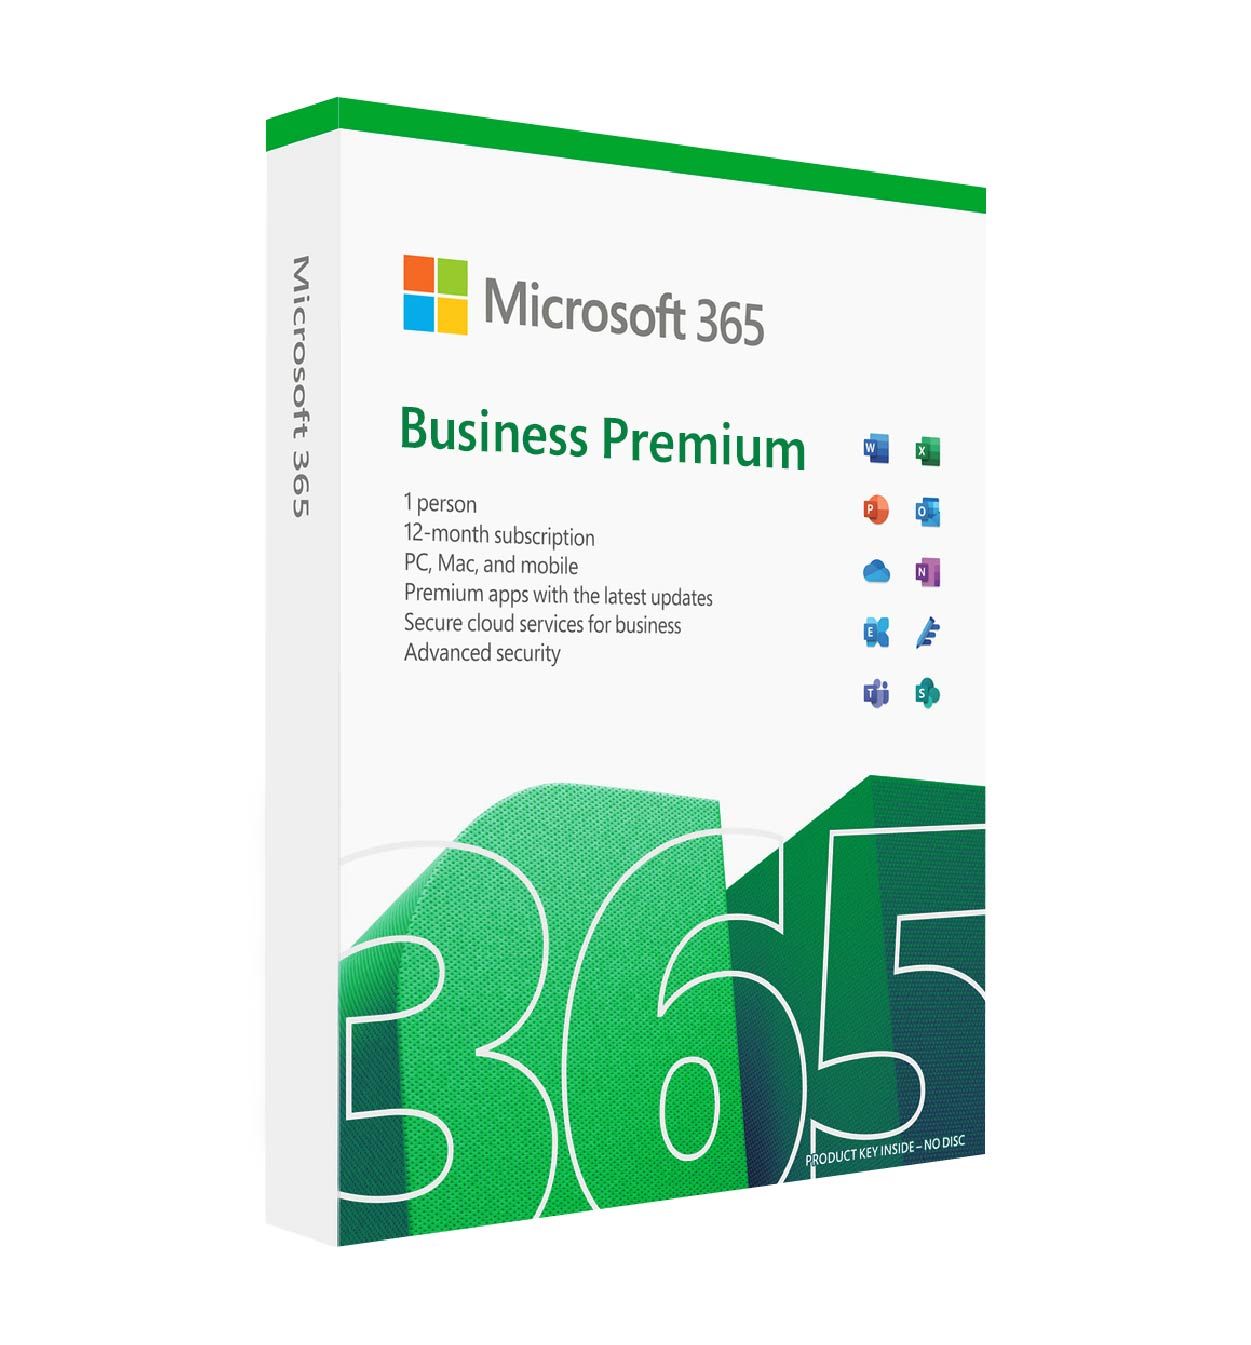 microsoft 365 business premium box